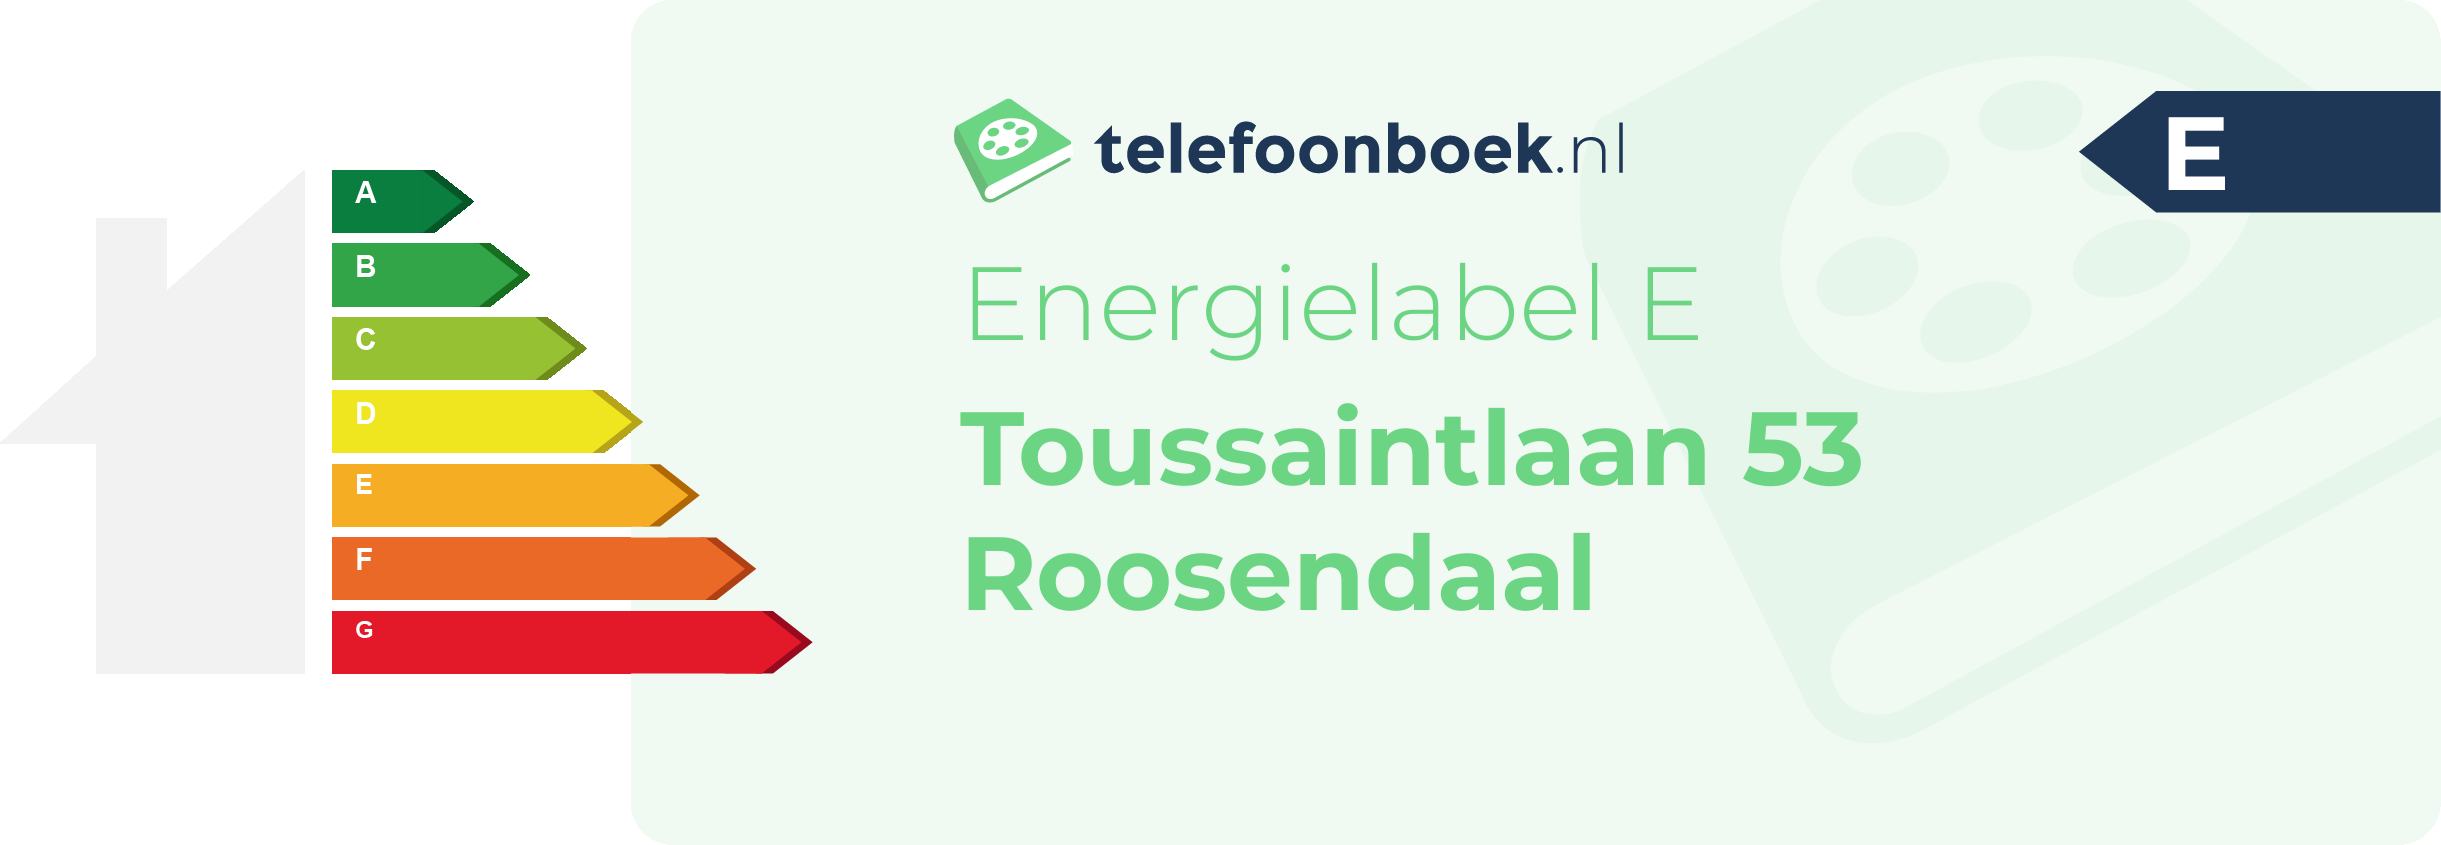 Energielabel Toussaintlaan 53 Roosendaal